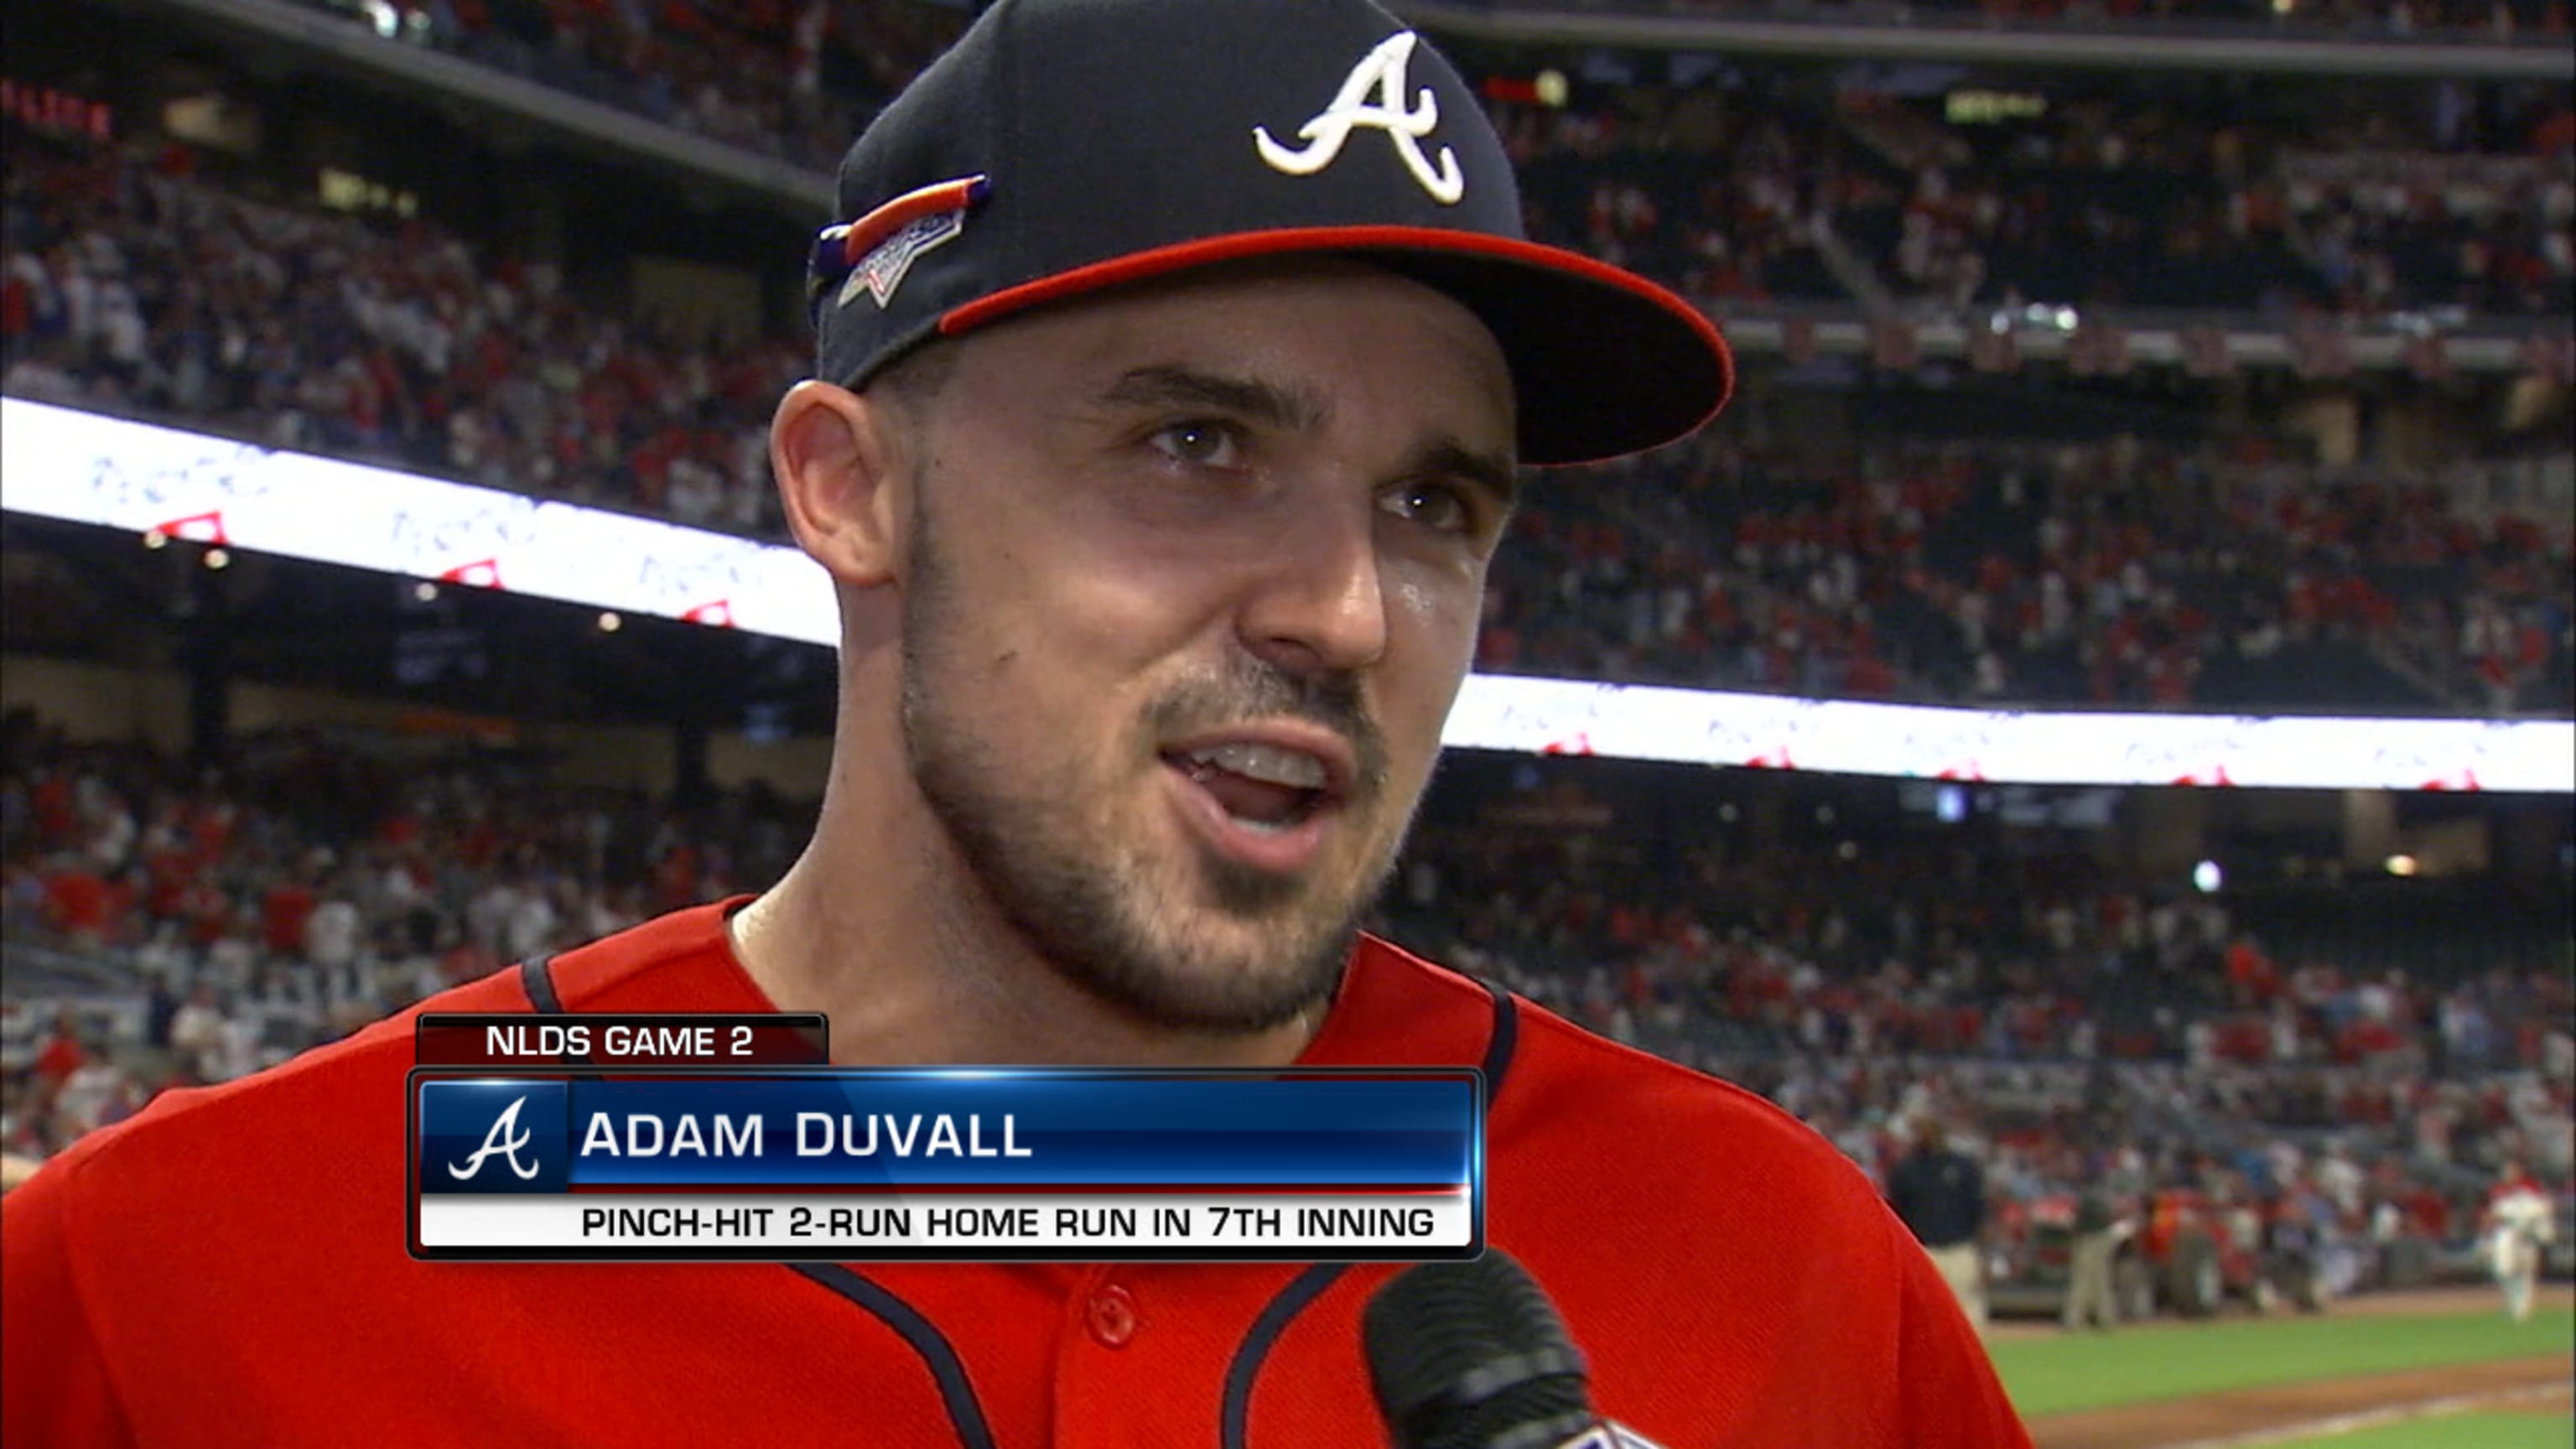 Adam Duvall hits pinch-hit homer in NLDS Game 2